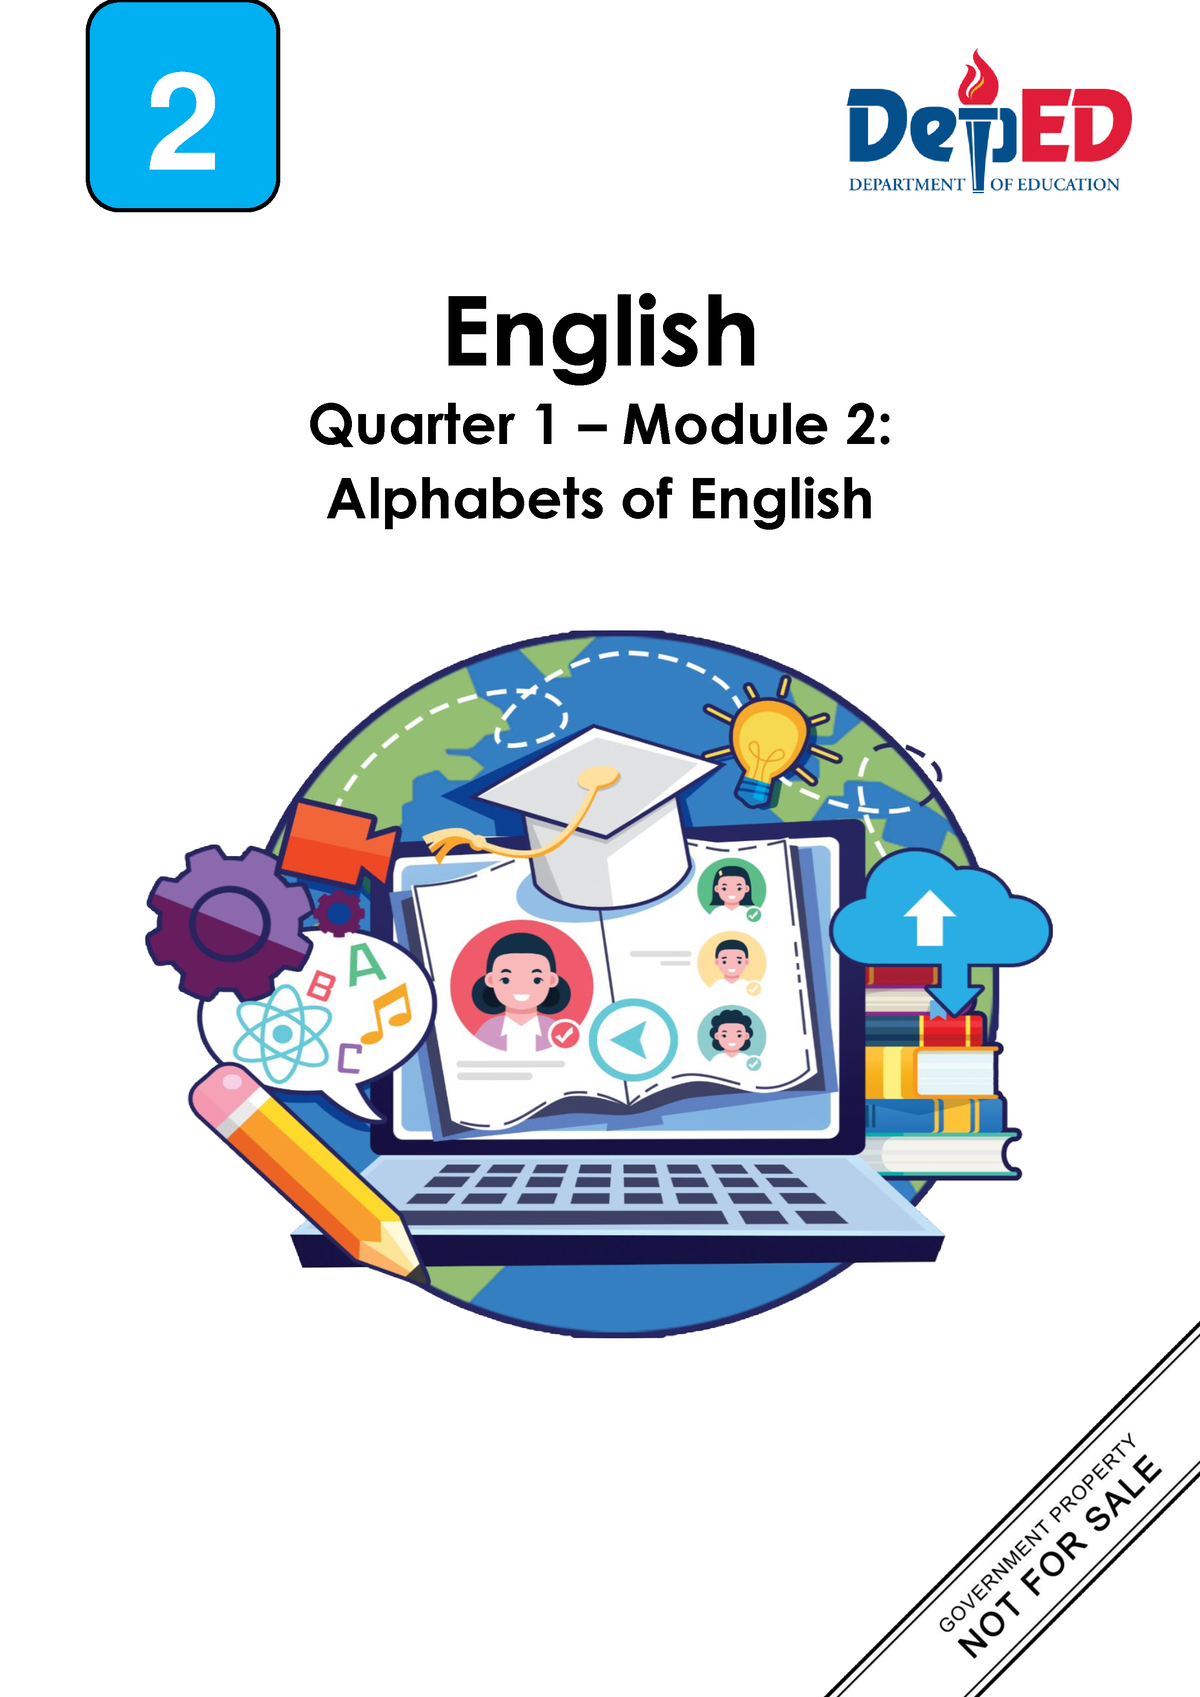 Q1 English 2 Module 2 Educational Purposes Only English Quarter 1 Module 2 Alphabets Of 9070